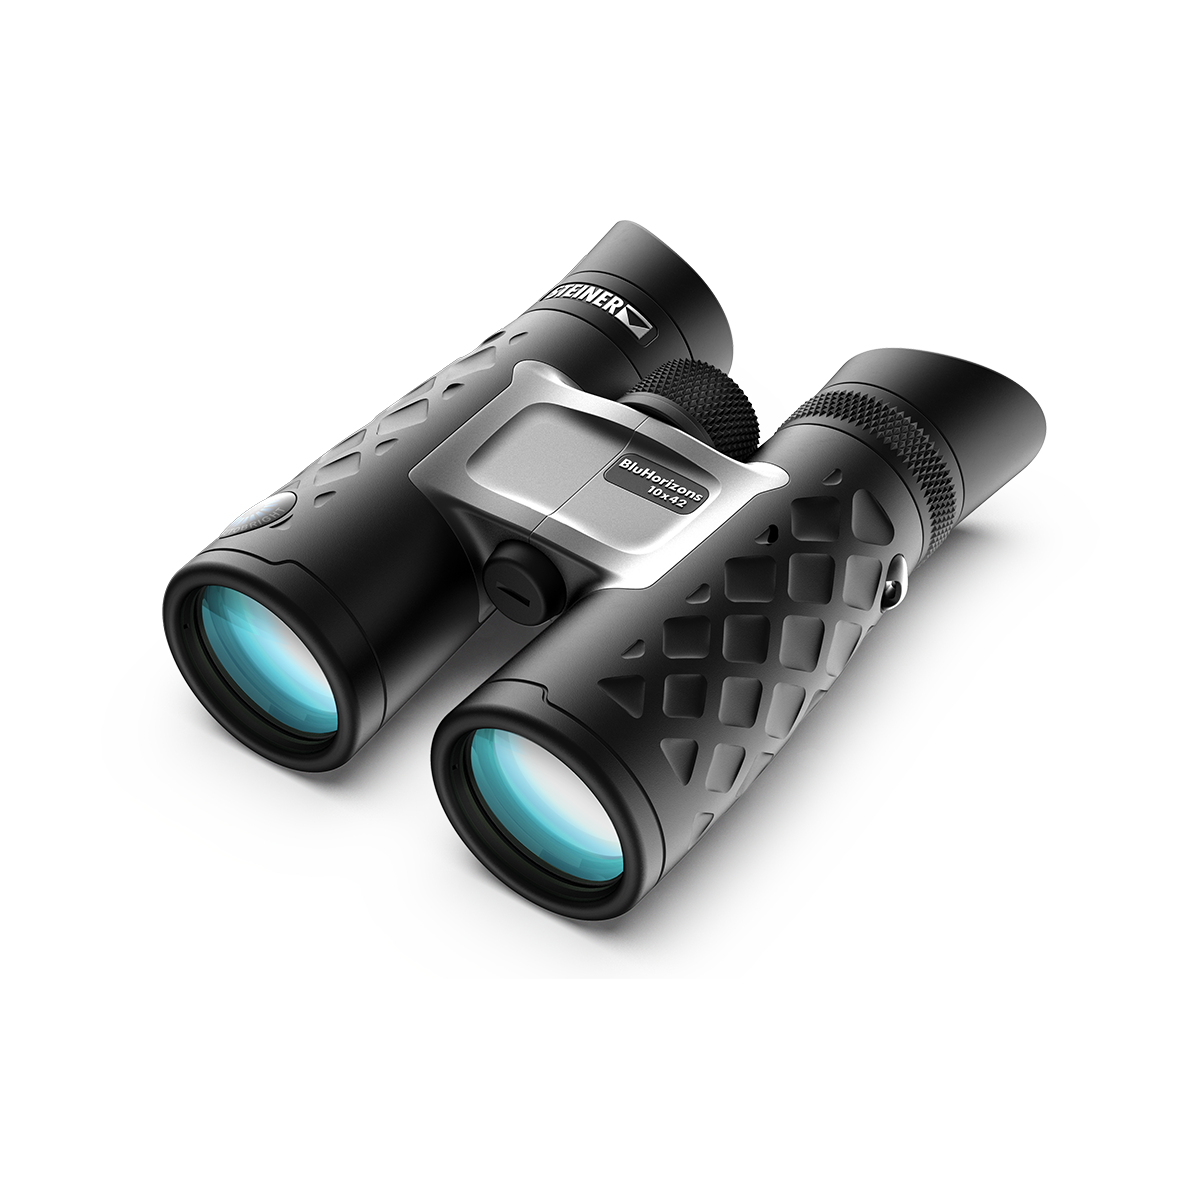 BluHorizons 10x42 - World’s First Sunlight Adaptive Binocular